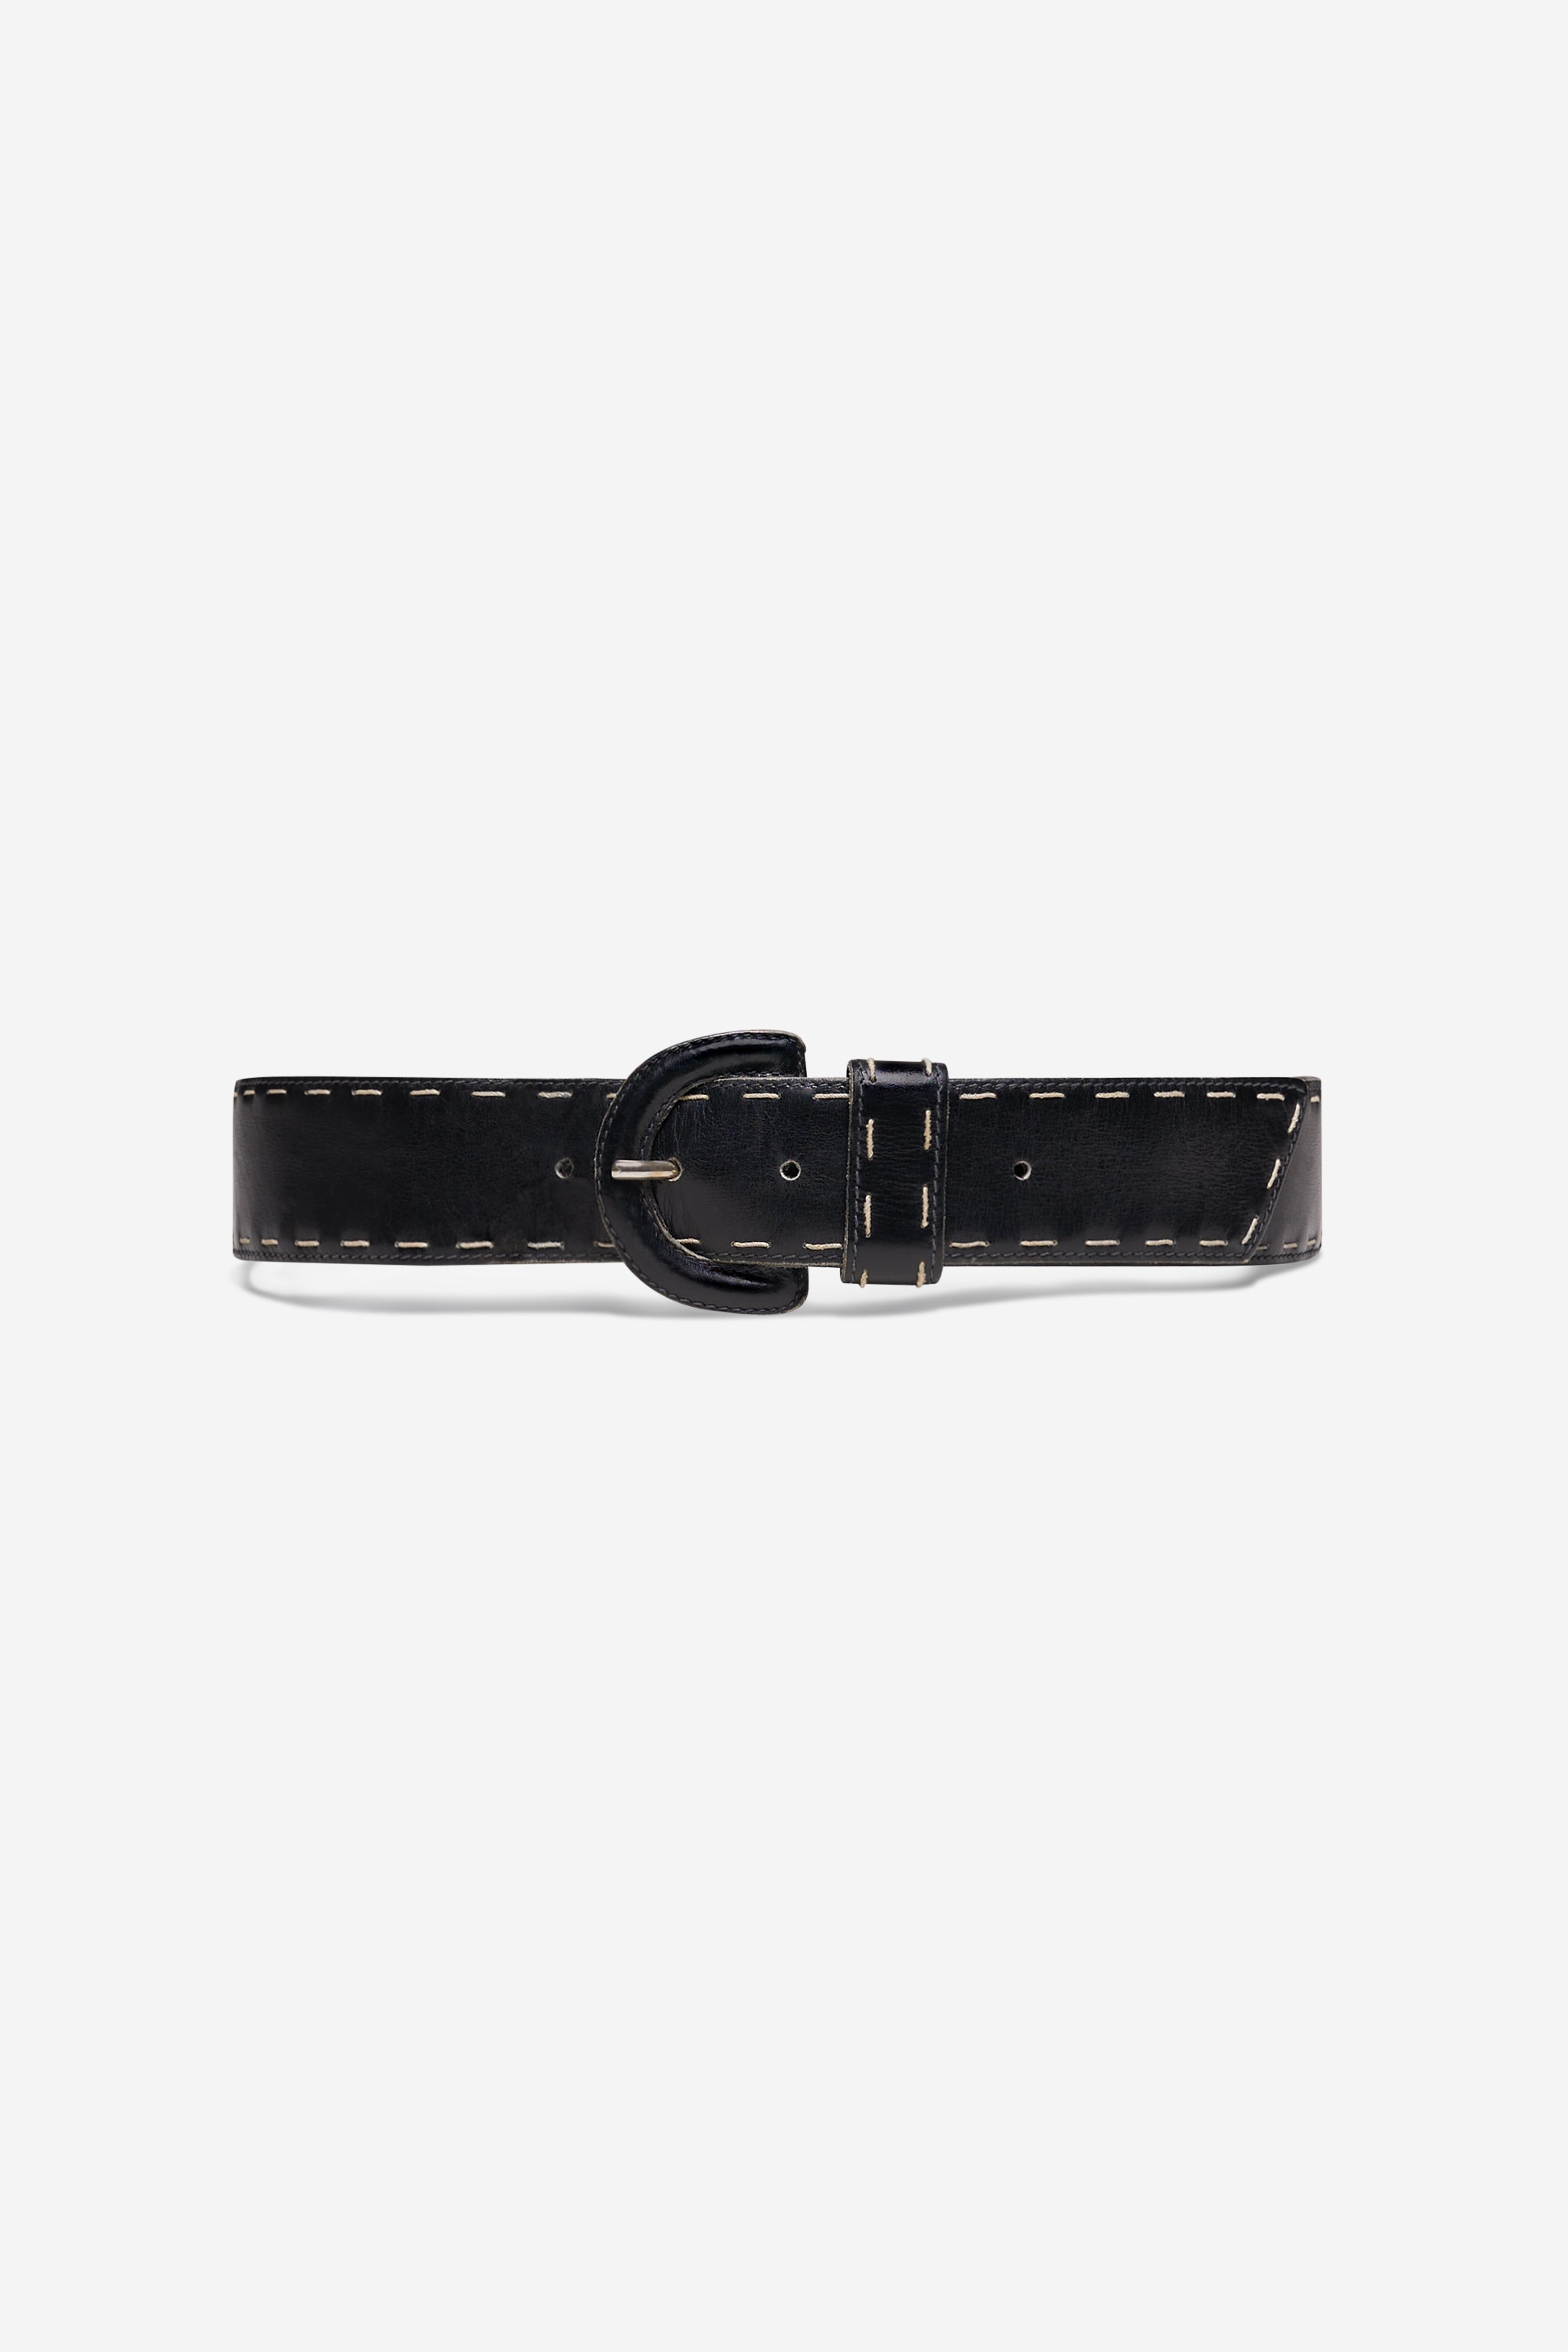 Prada black leather belt